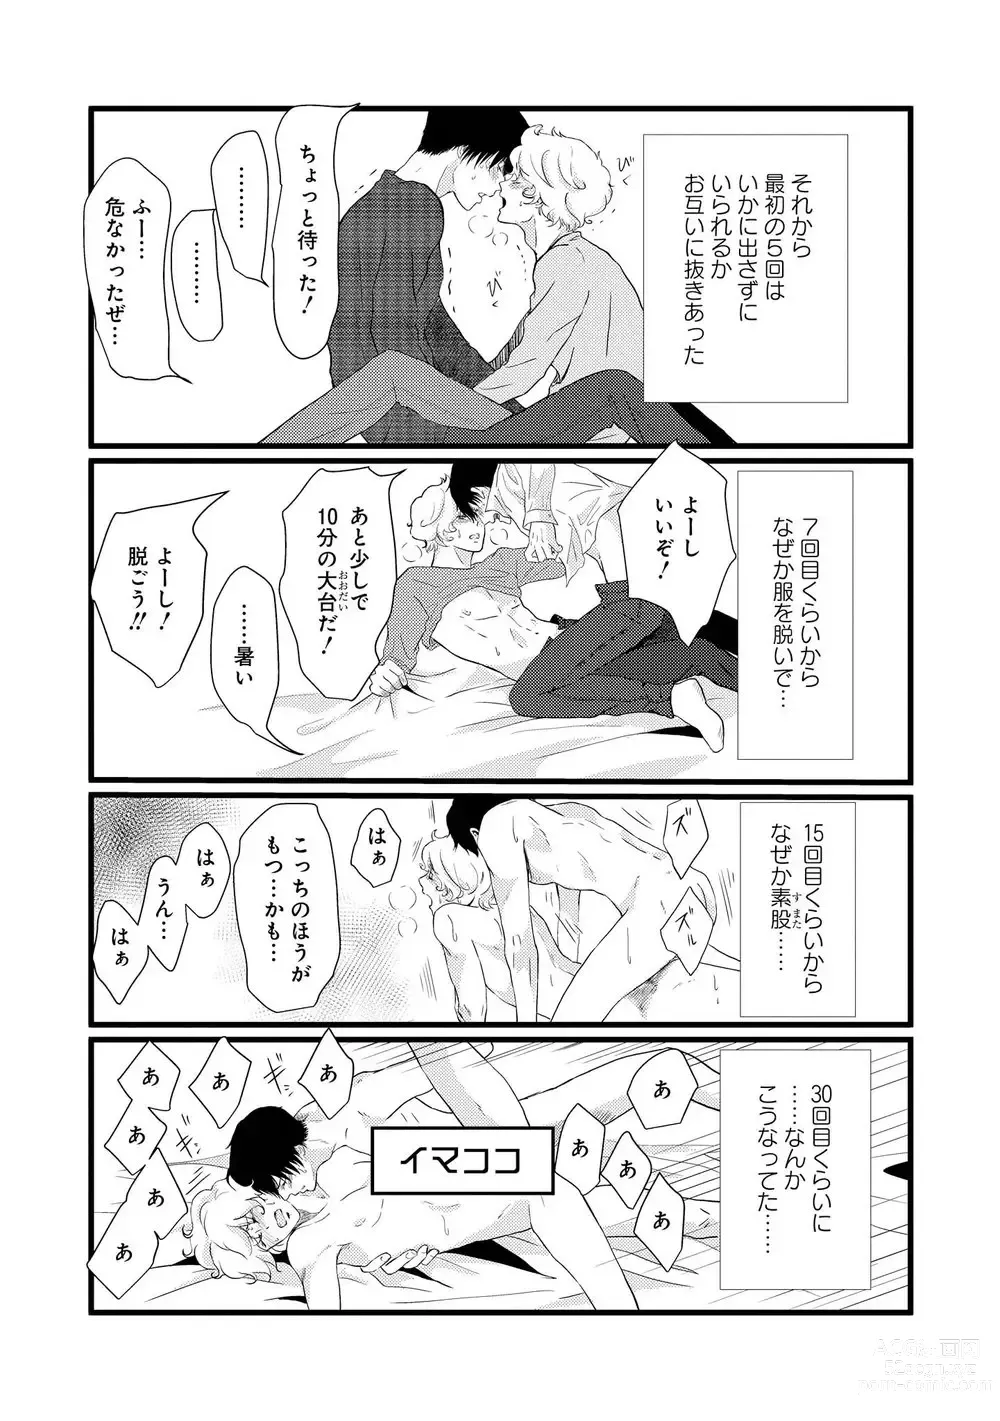 Page 12 of manga AHOERO